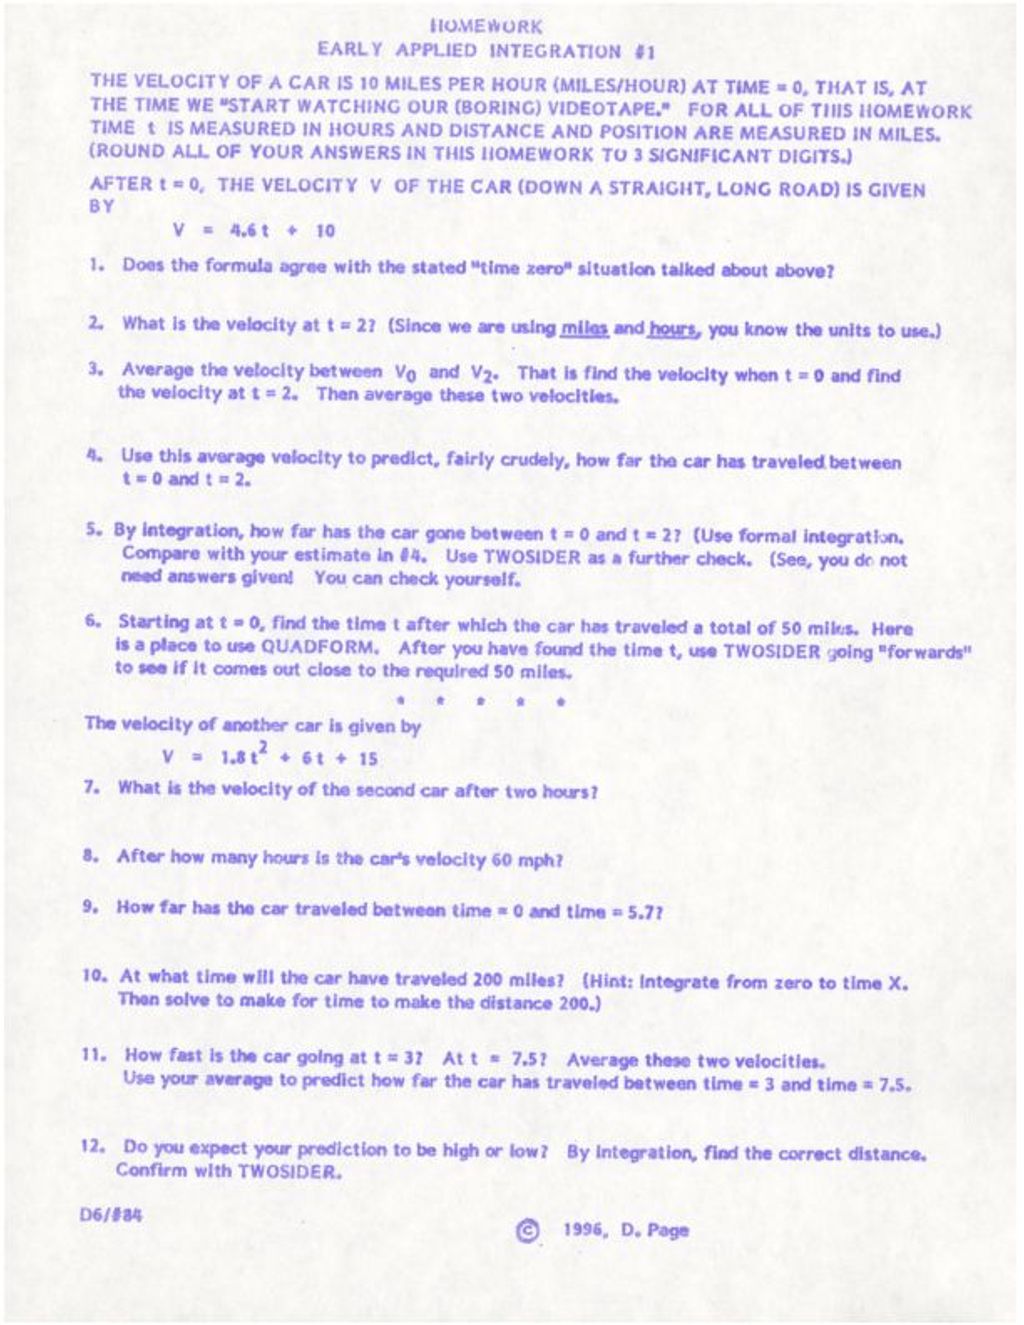 Homework Early Applied Integration #1 (1996)